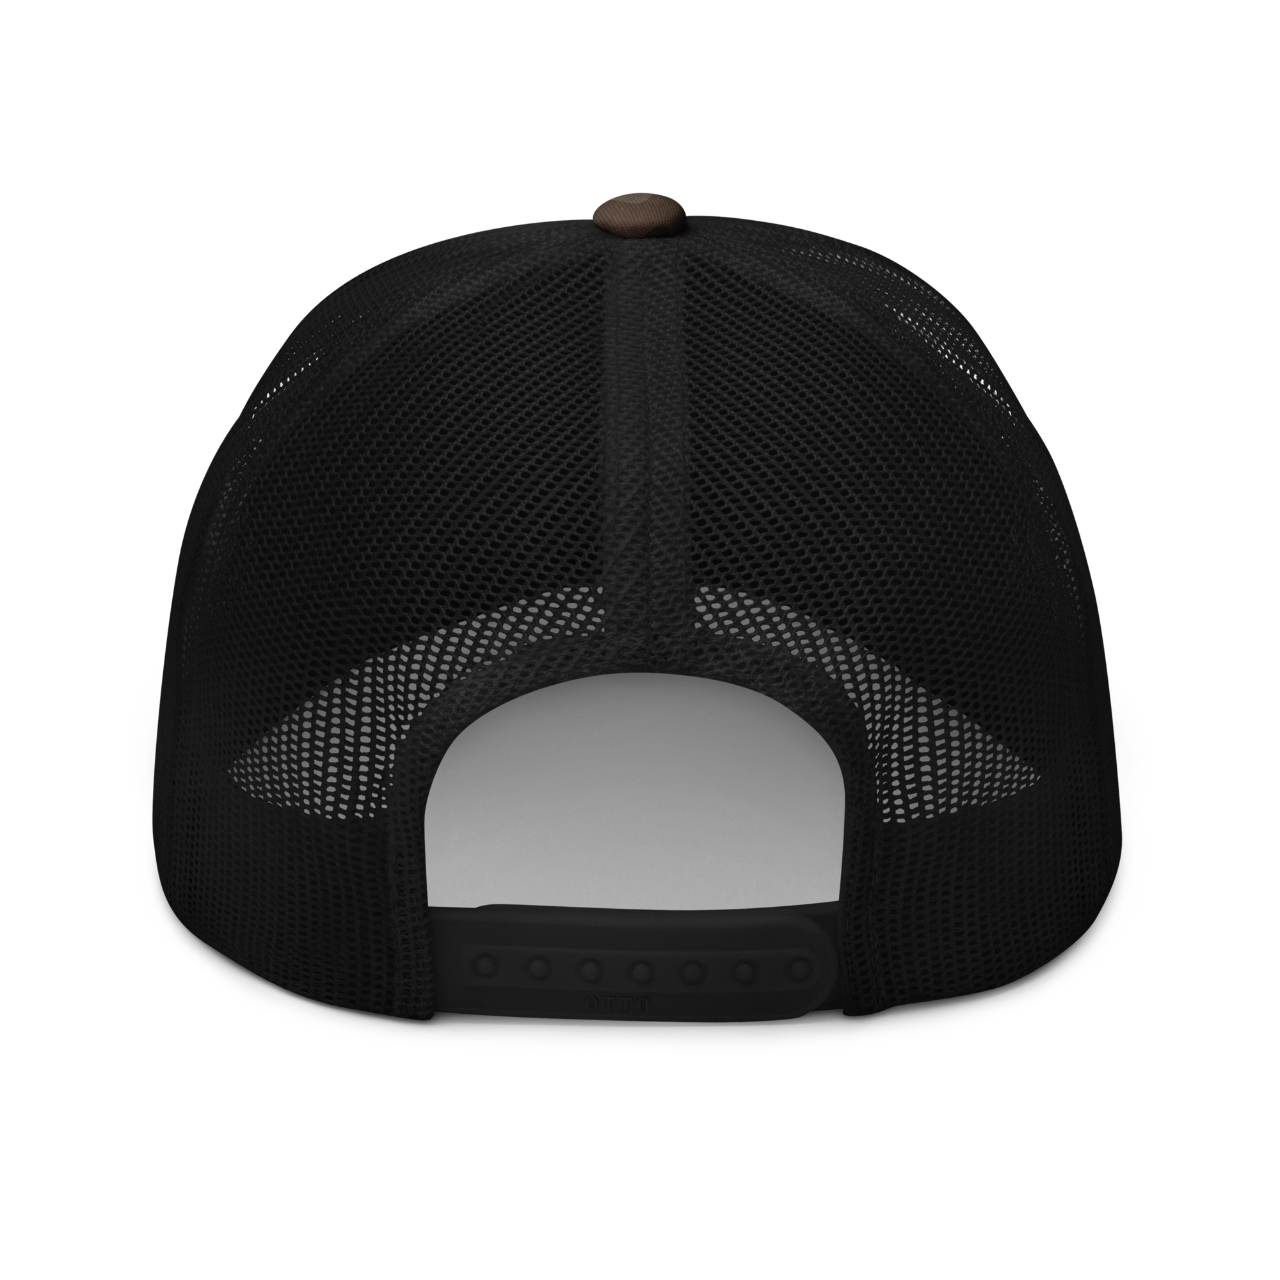 axsgtr axess electronics guitar music industry branded merchandise swag trucker cap hat camo black back